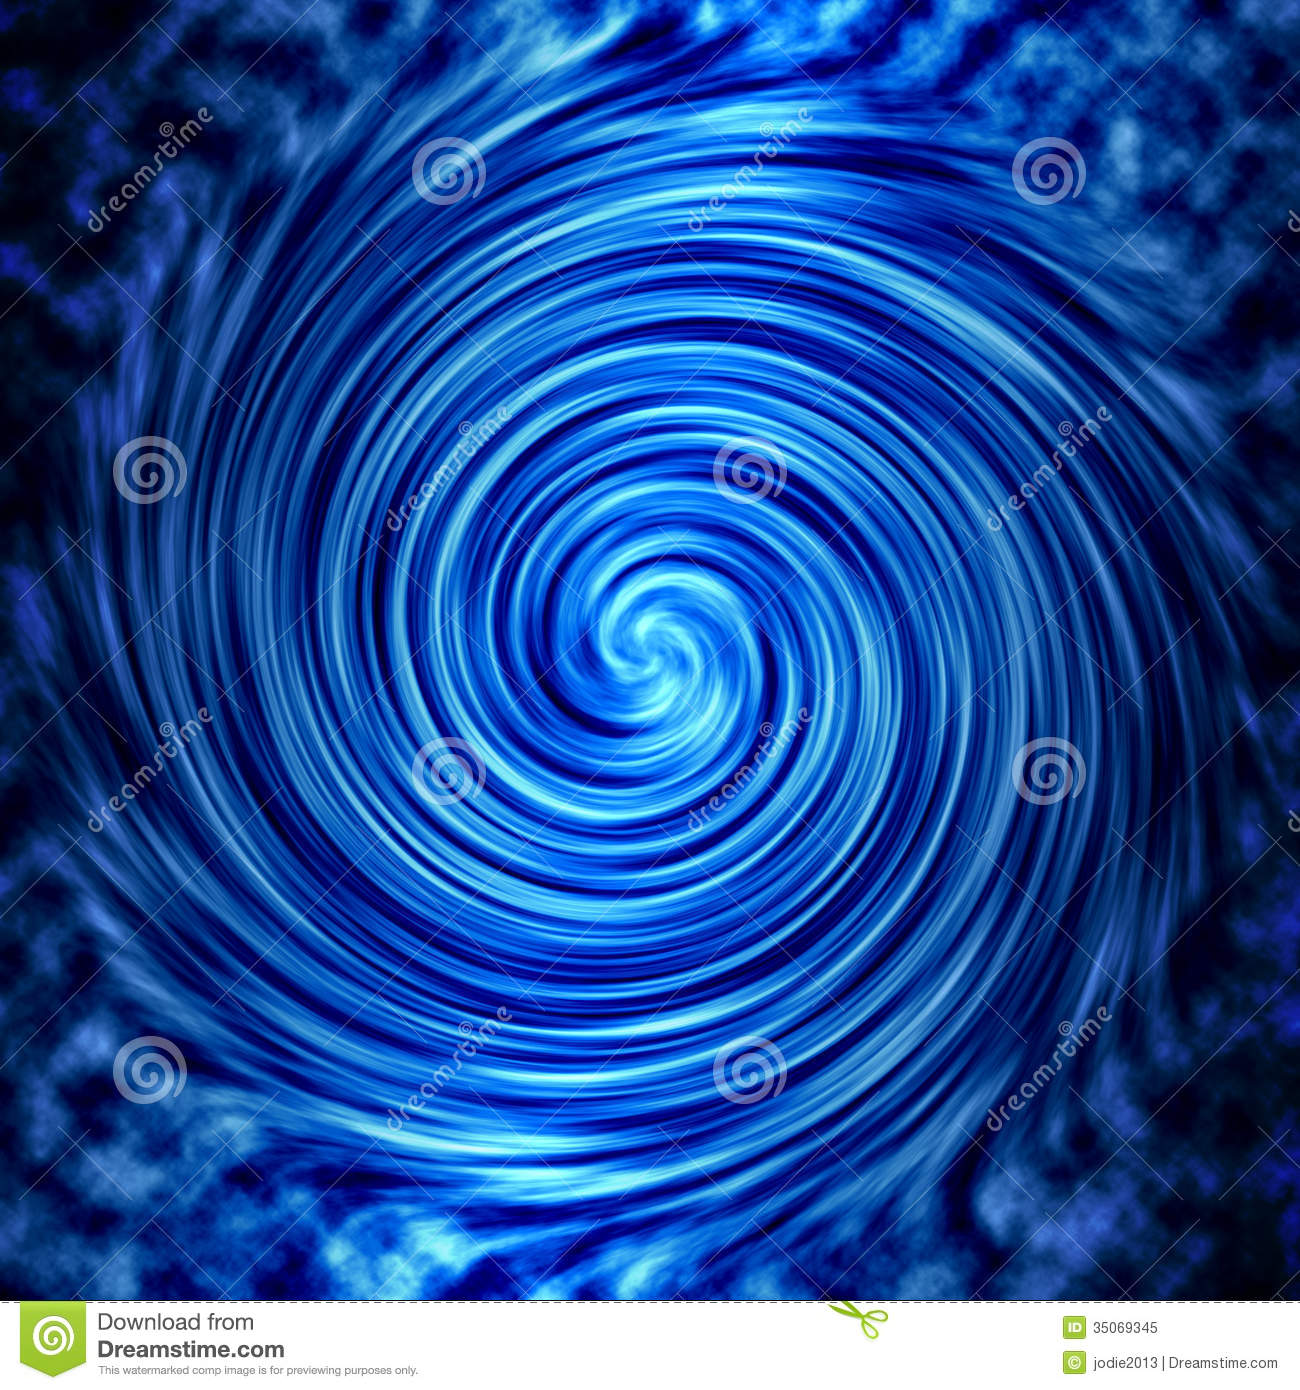 Royal Blue Abstract Swirls